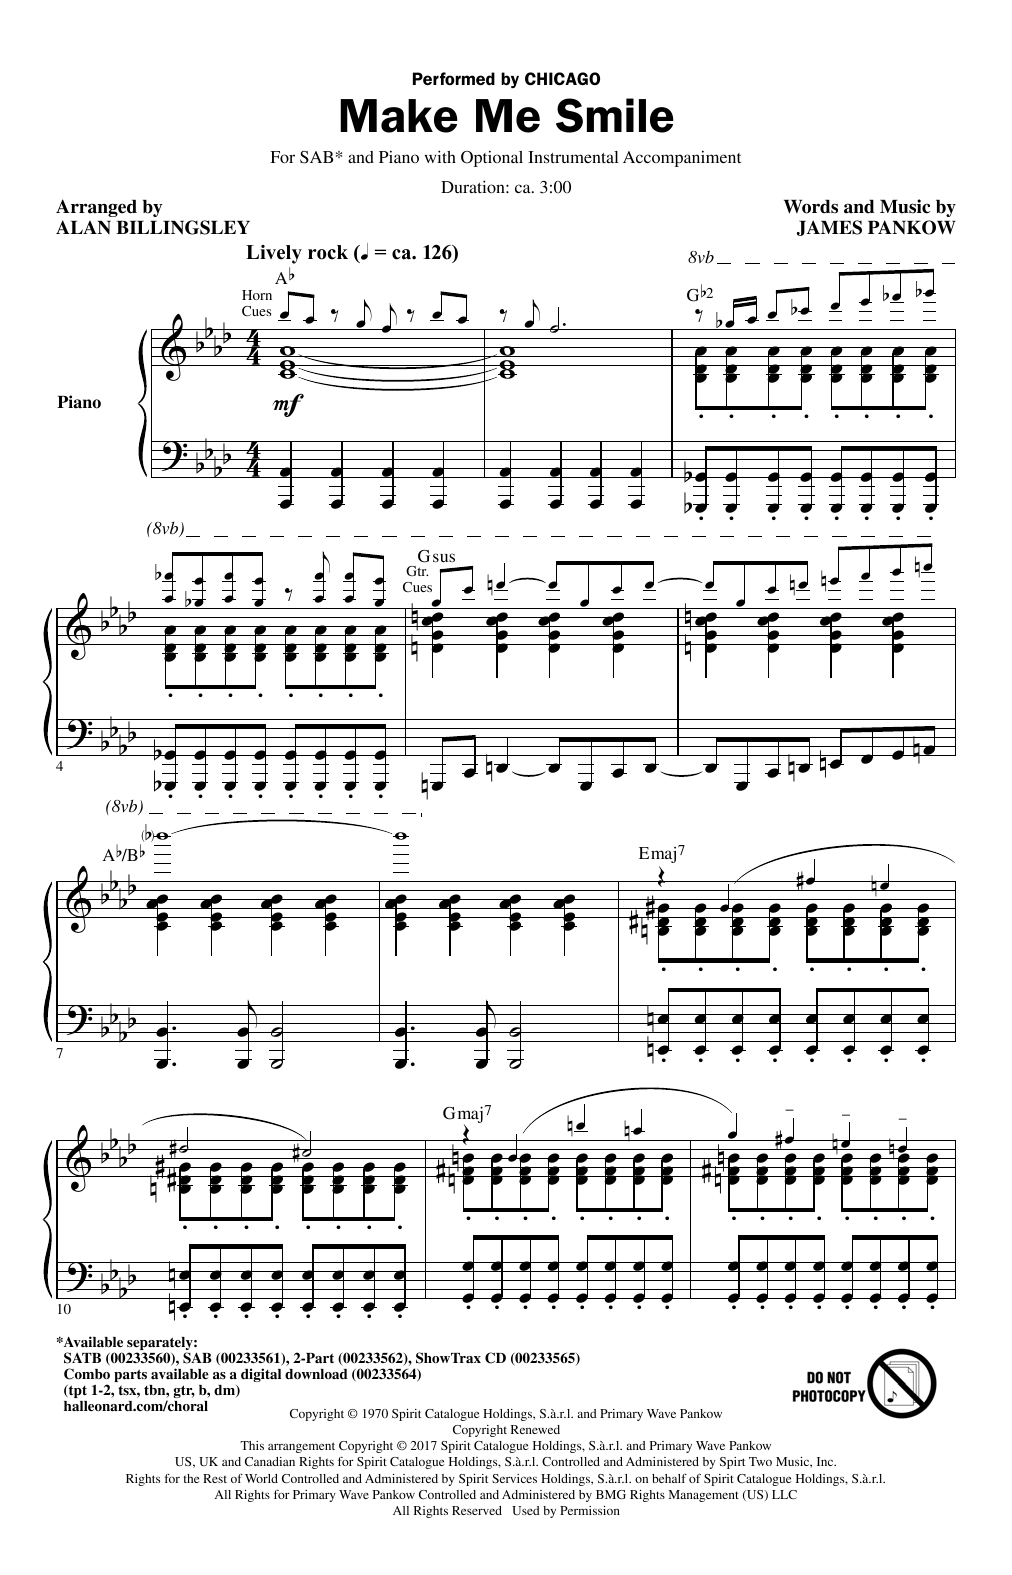 Alan Billingsley Make Me Smile Sheet Music Notes & Chords for 2-Part Choir - Download or Print PDF